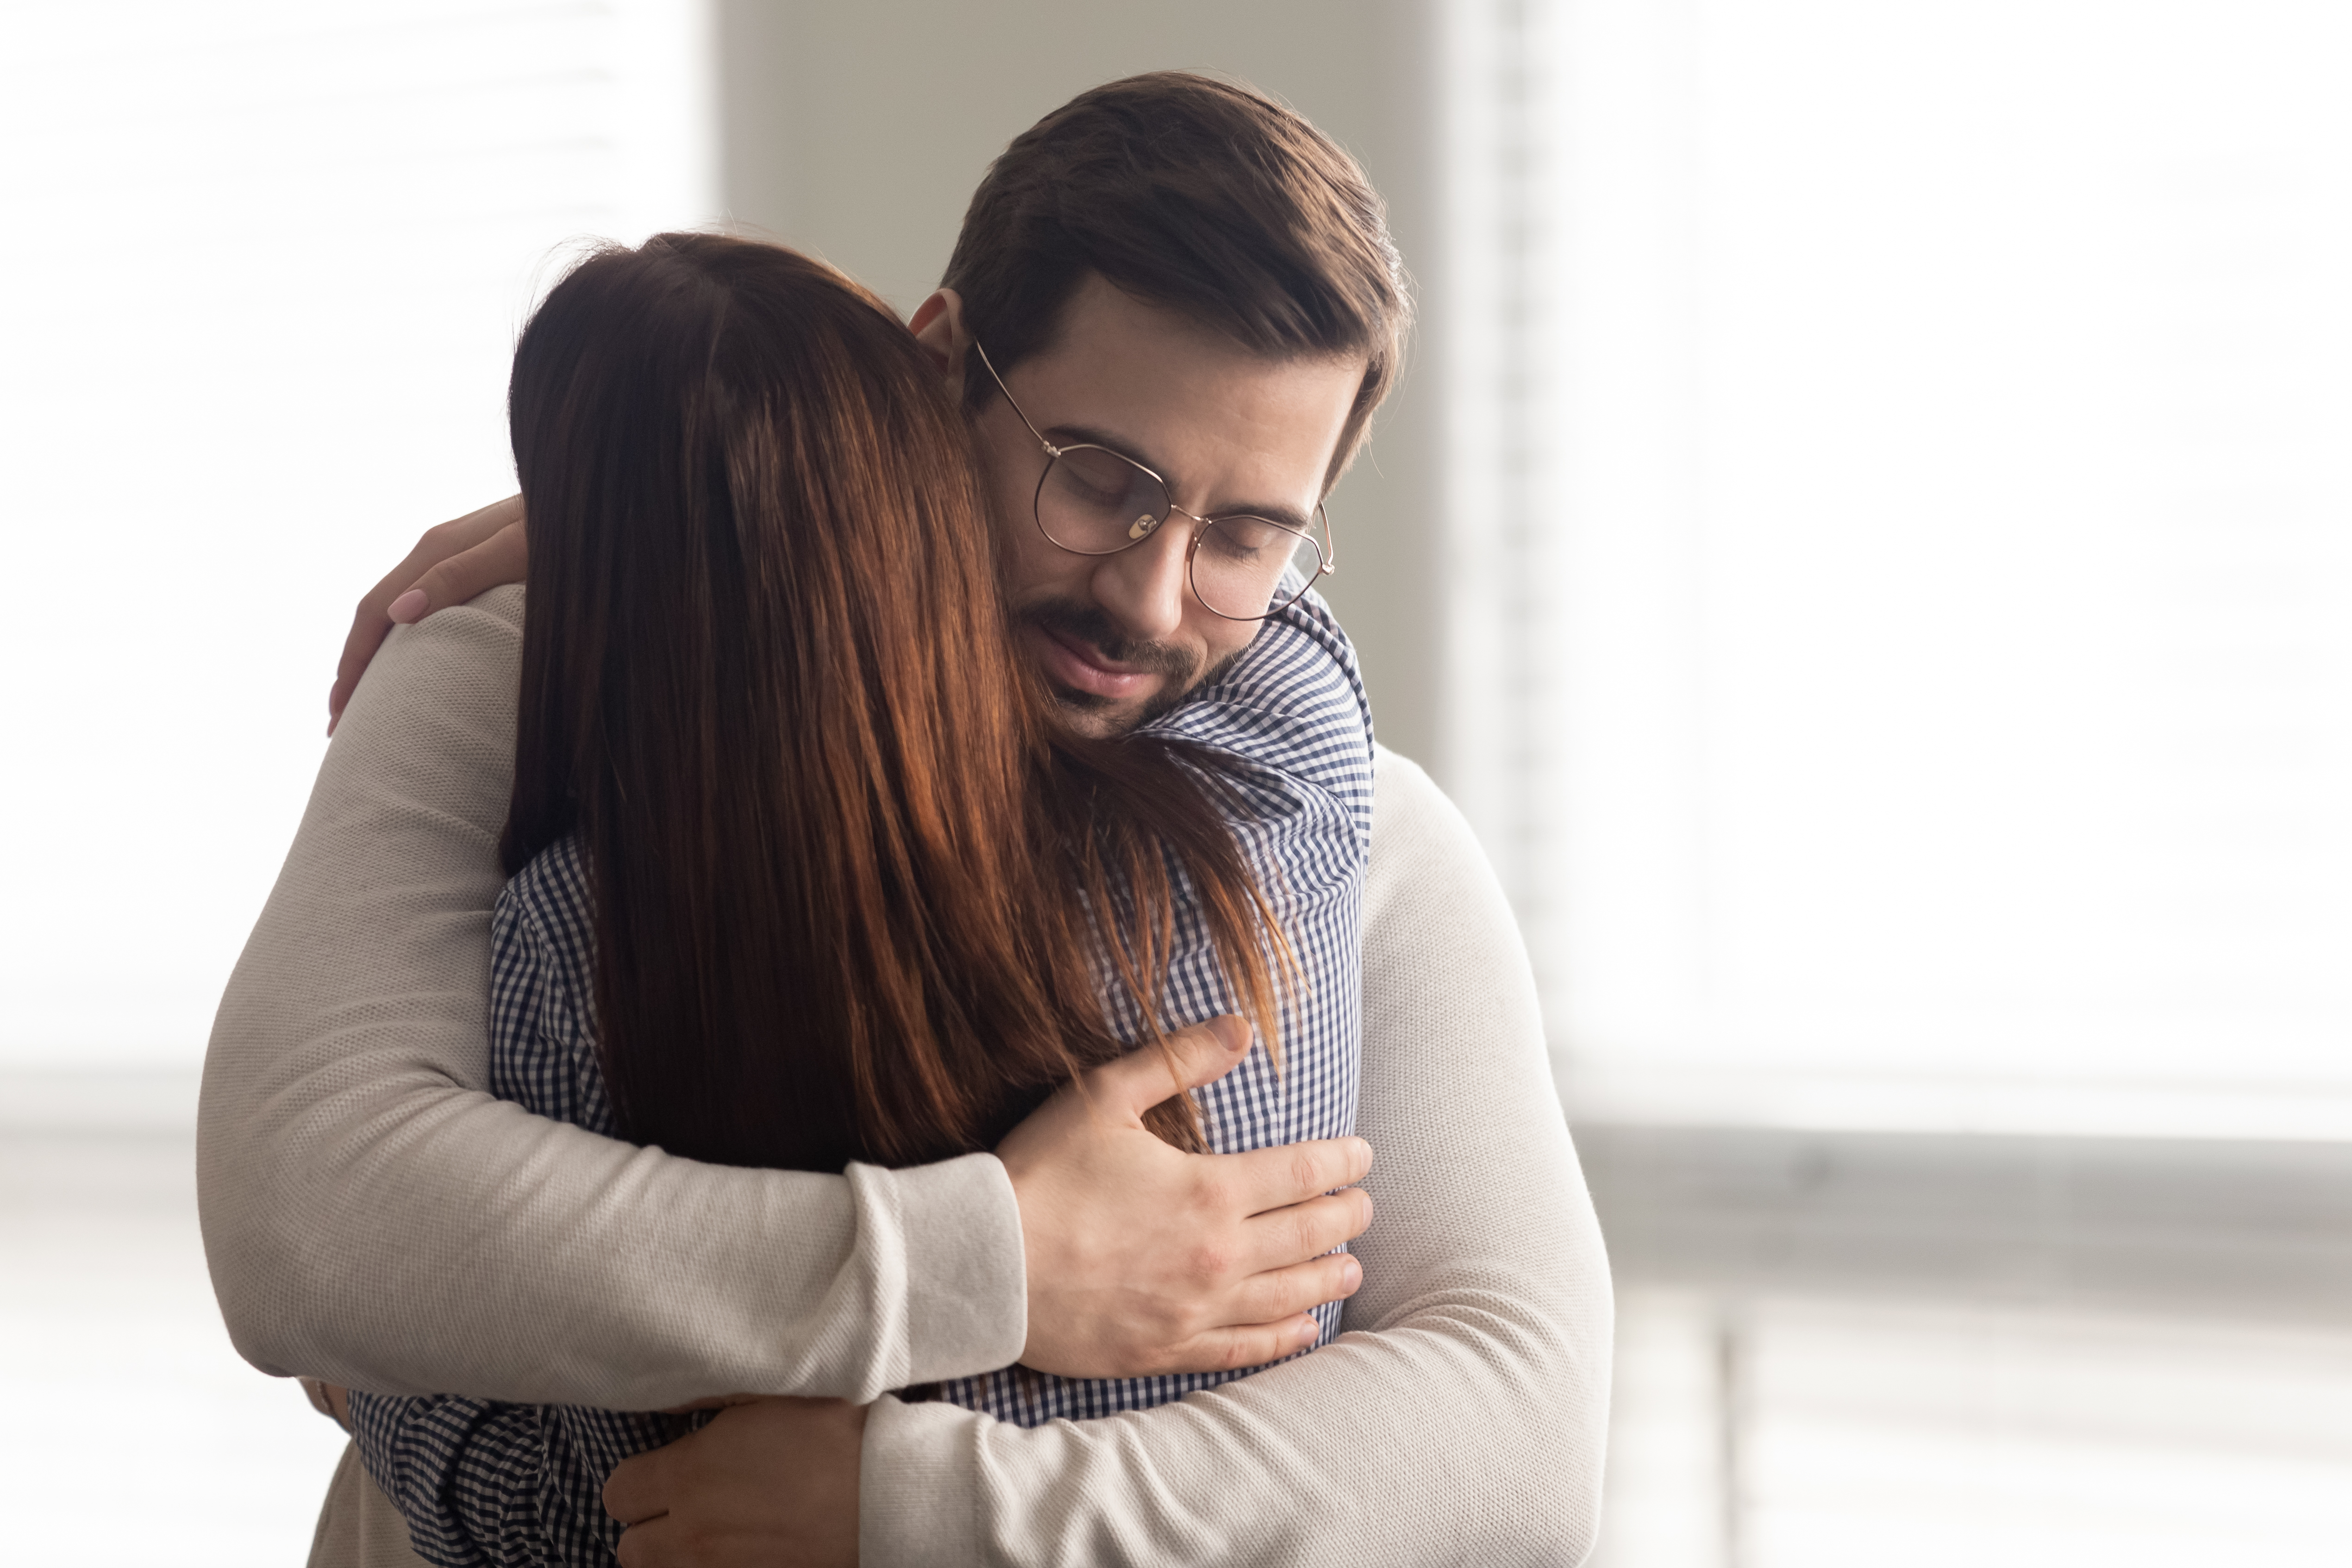 Man hugs sad woman | Source: Shutterstock.com